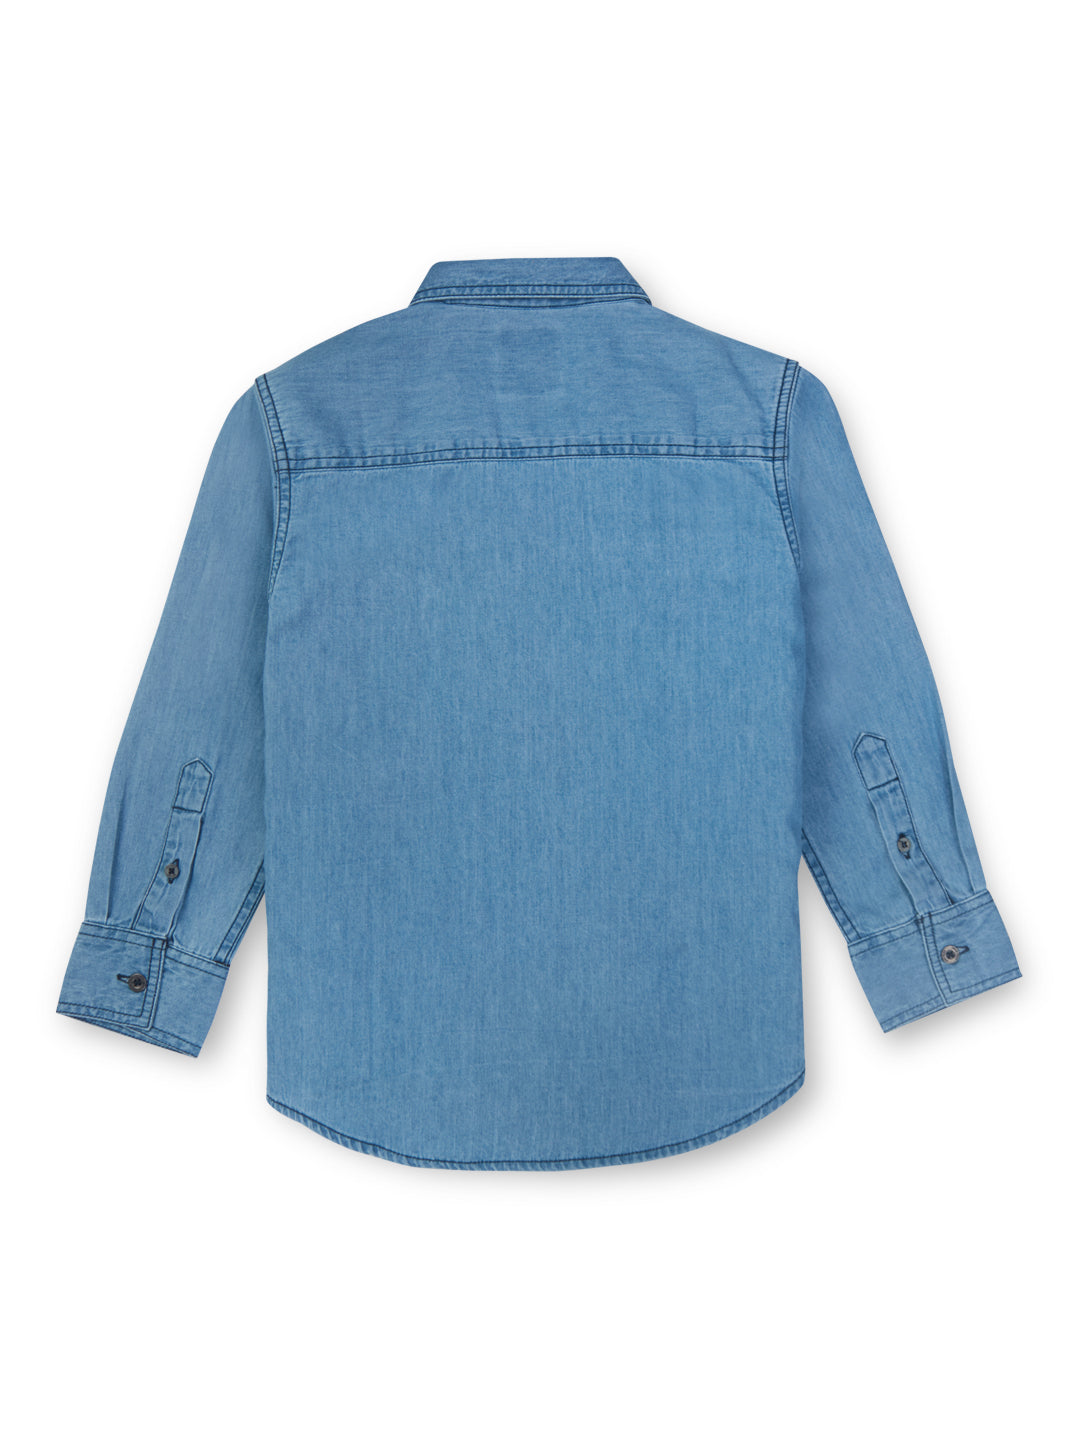 Boys blue denim full sleeves solid shirt.